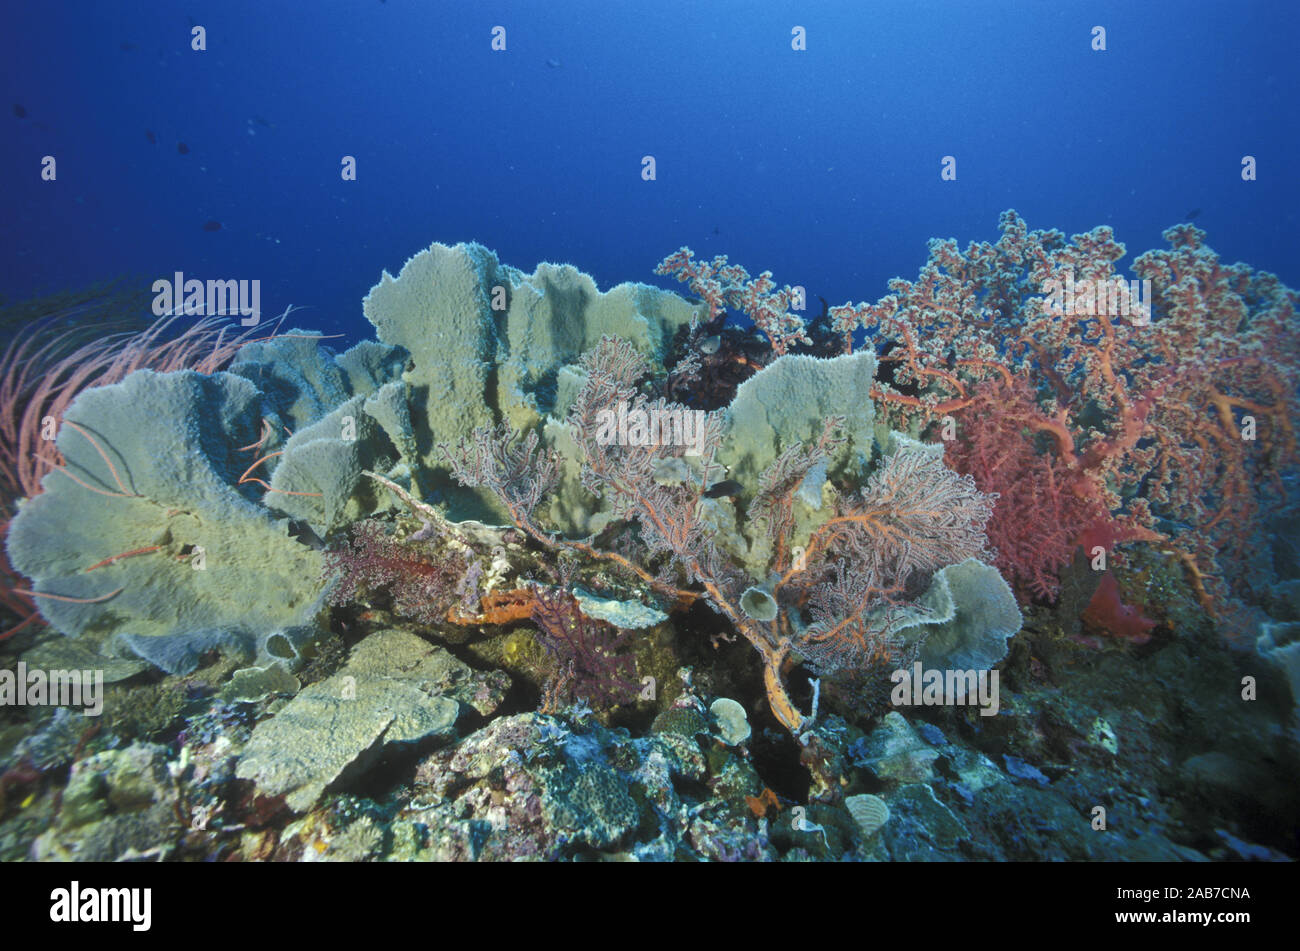 Elephant ear sponges, sea fans and sea whips on a tropical reef. Papua New Guinea Stock Photo